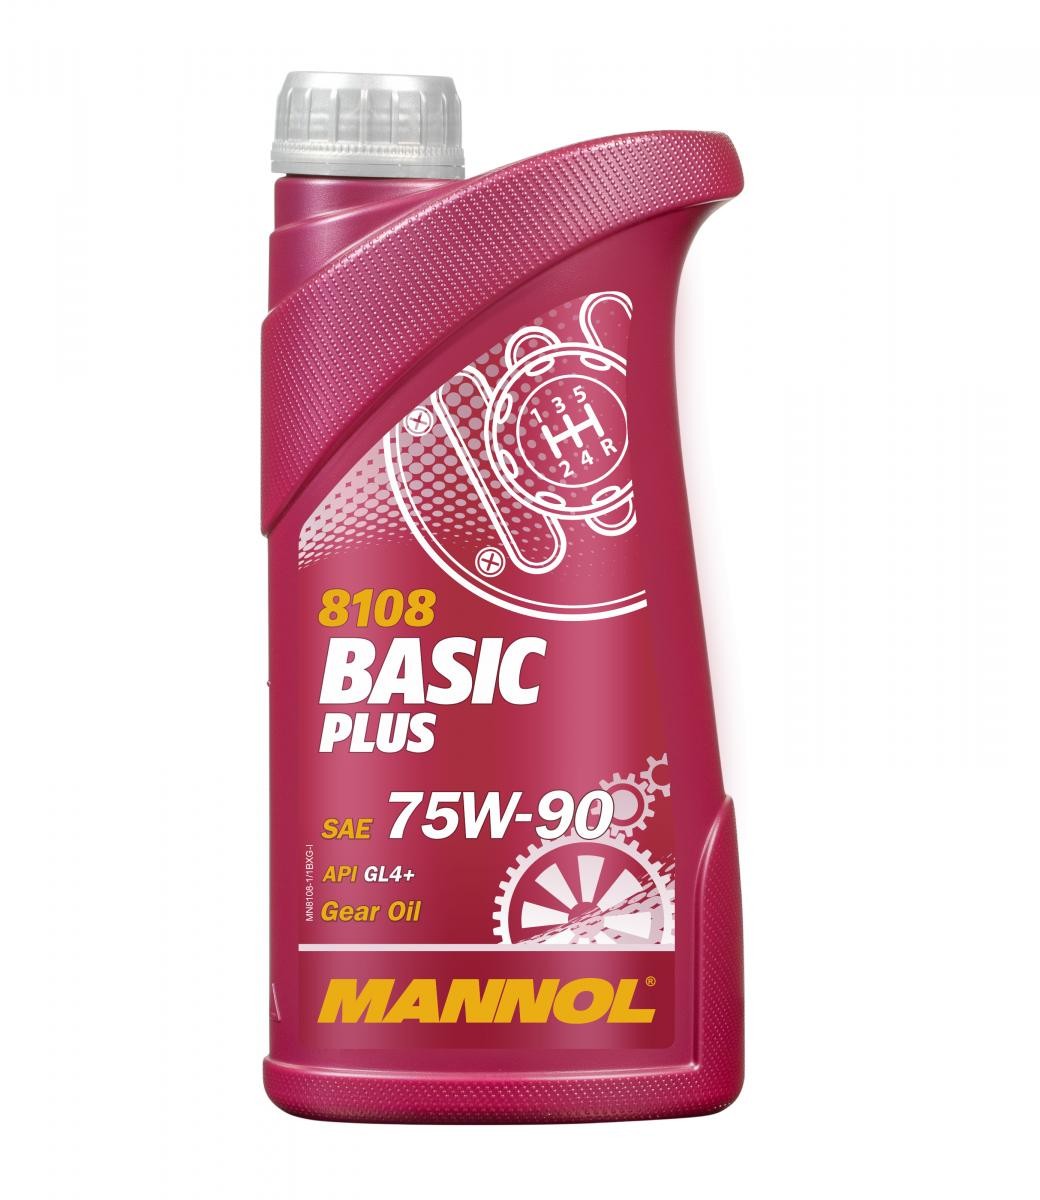 MANNOL BASIC PLUS 75W-90, Vollsynthetiköl, Inhalt: 1l MIL-L 2105, VW 501 50 Getriebeöl MN8108-1 kaufen